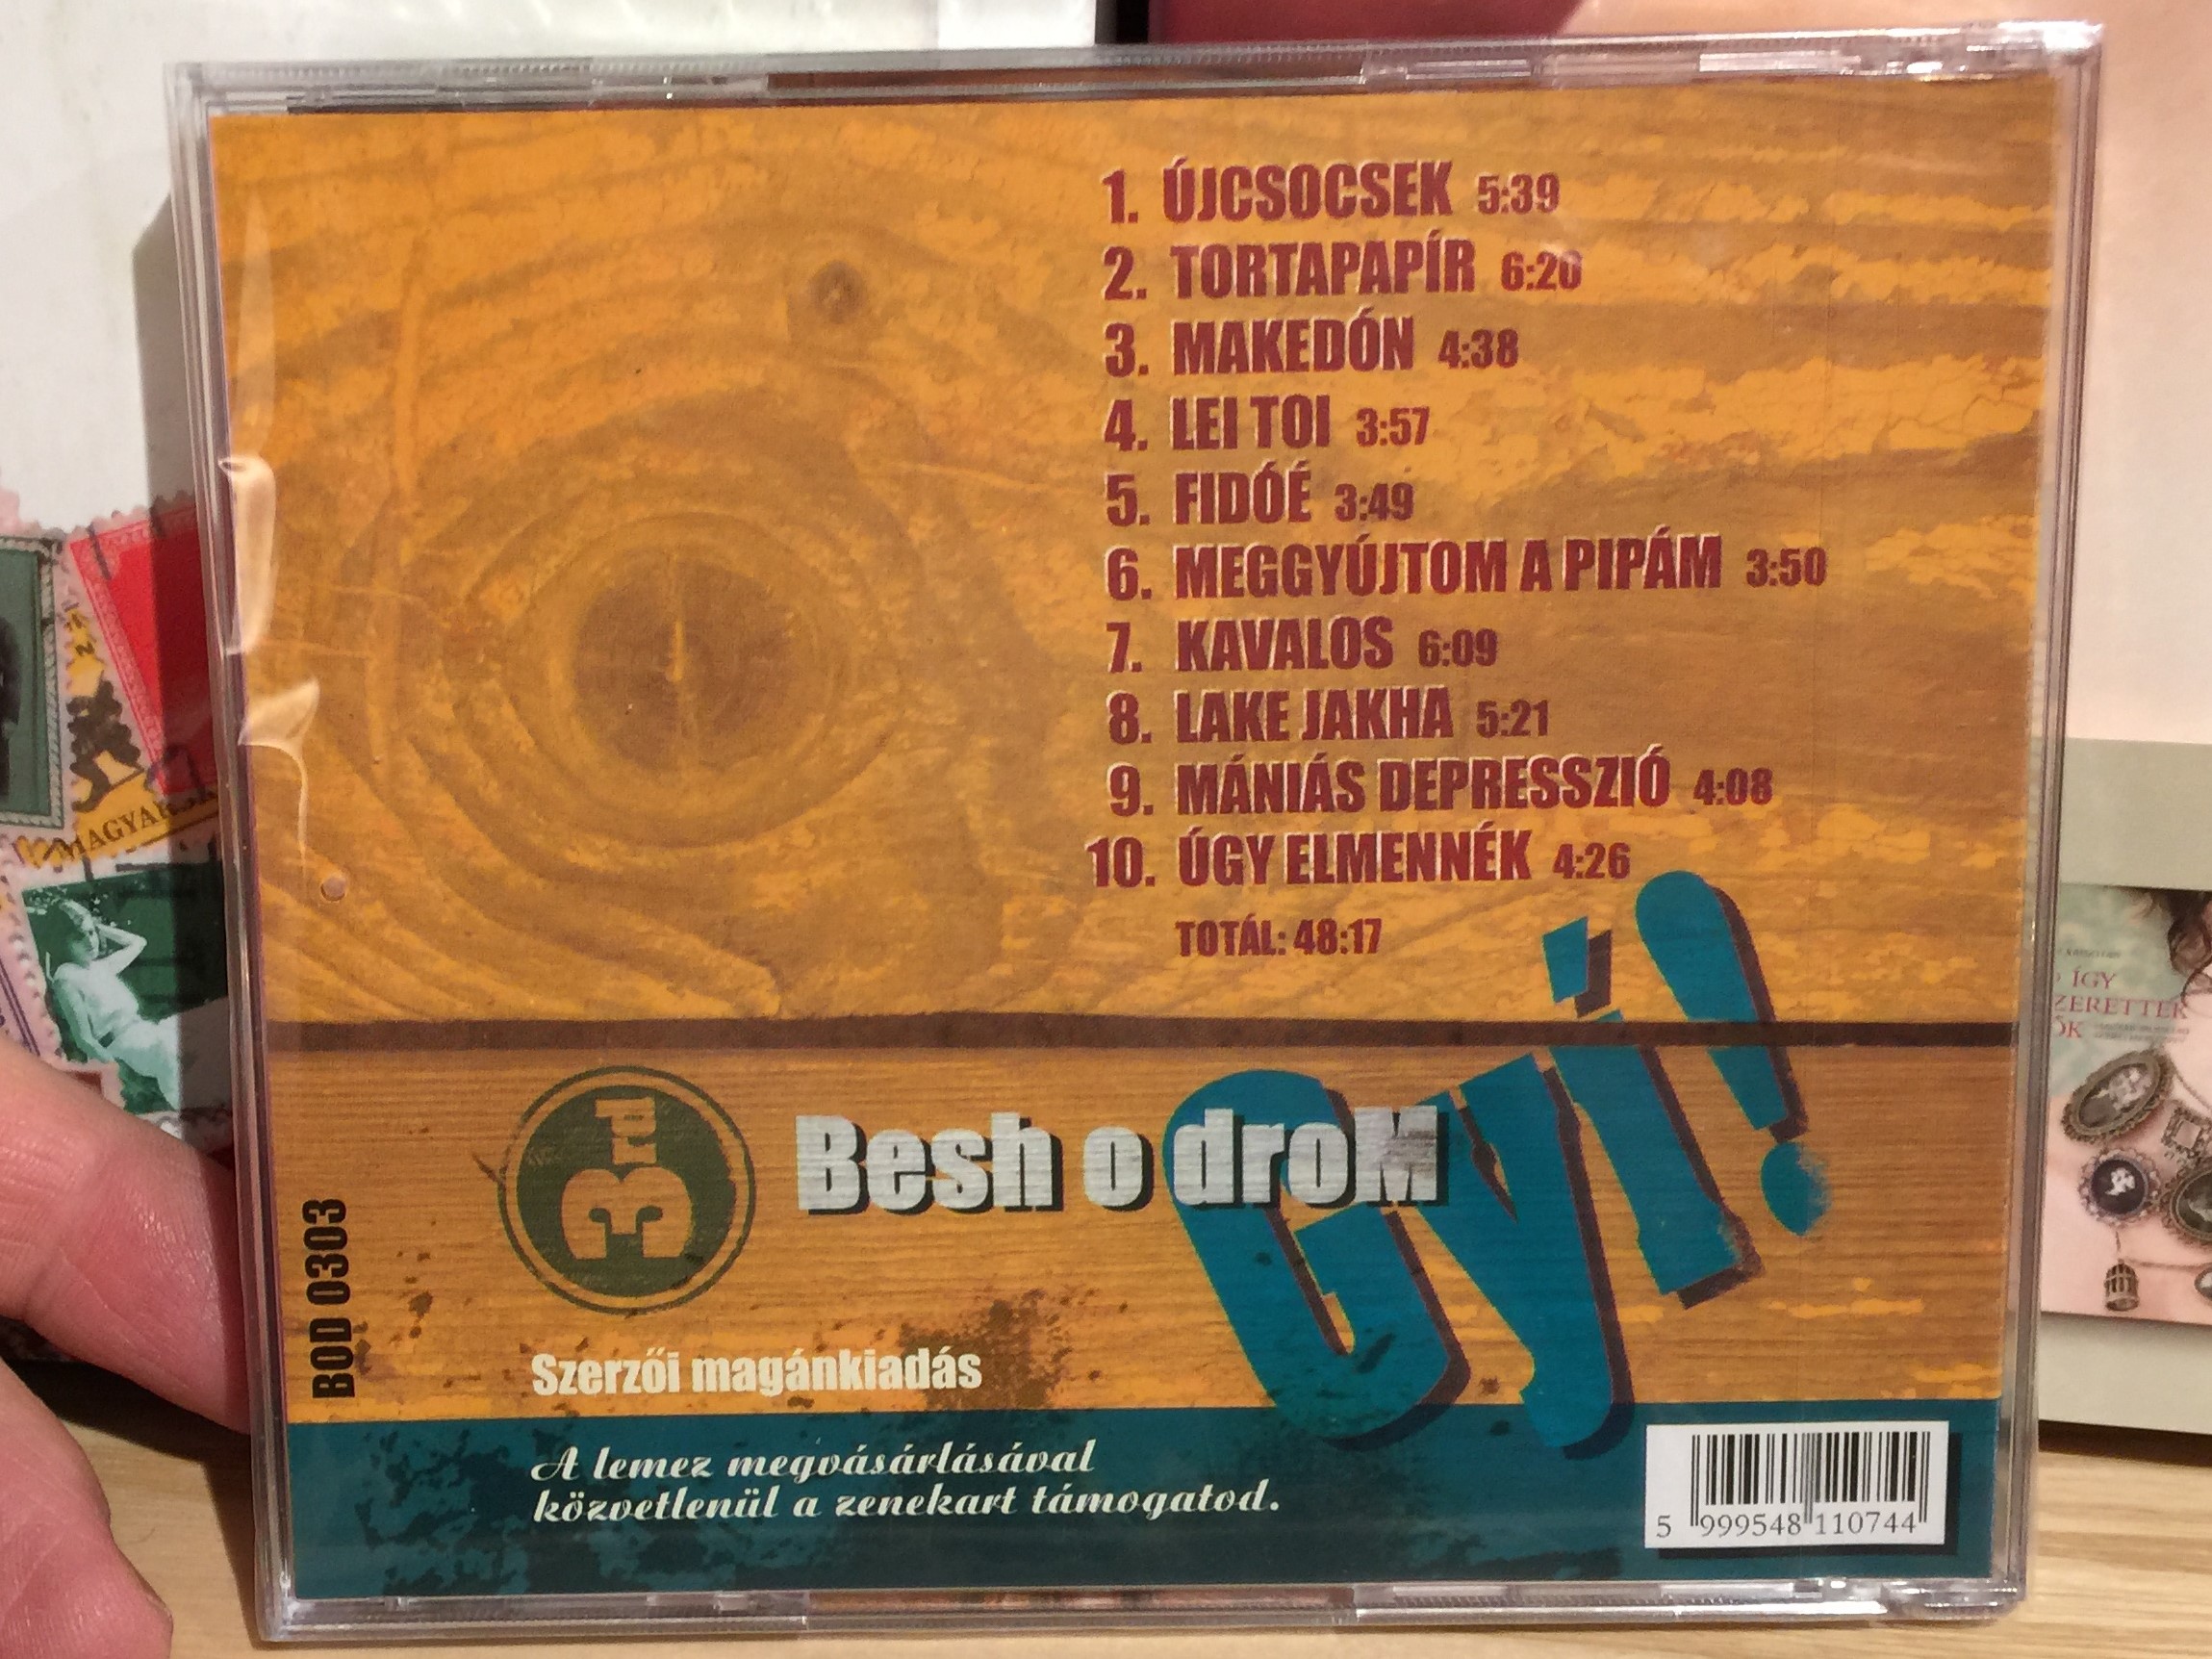 besh-o-drom-gy-audio-cd-2004-bod-0303-2-.jpg